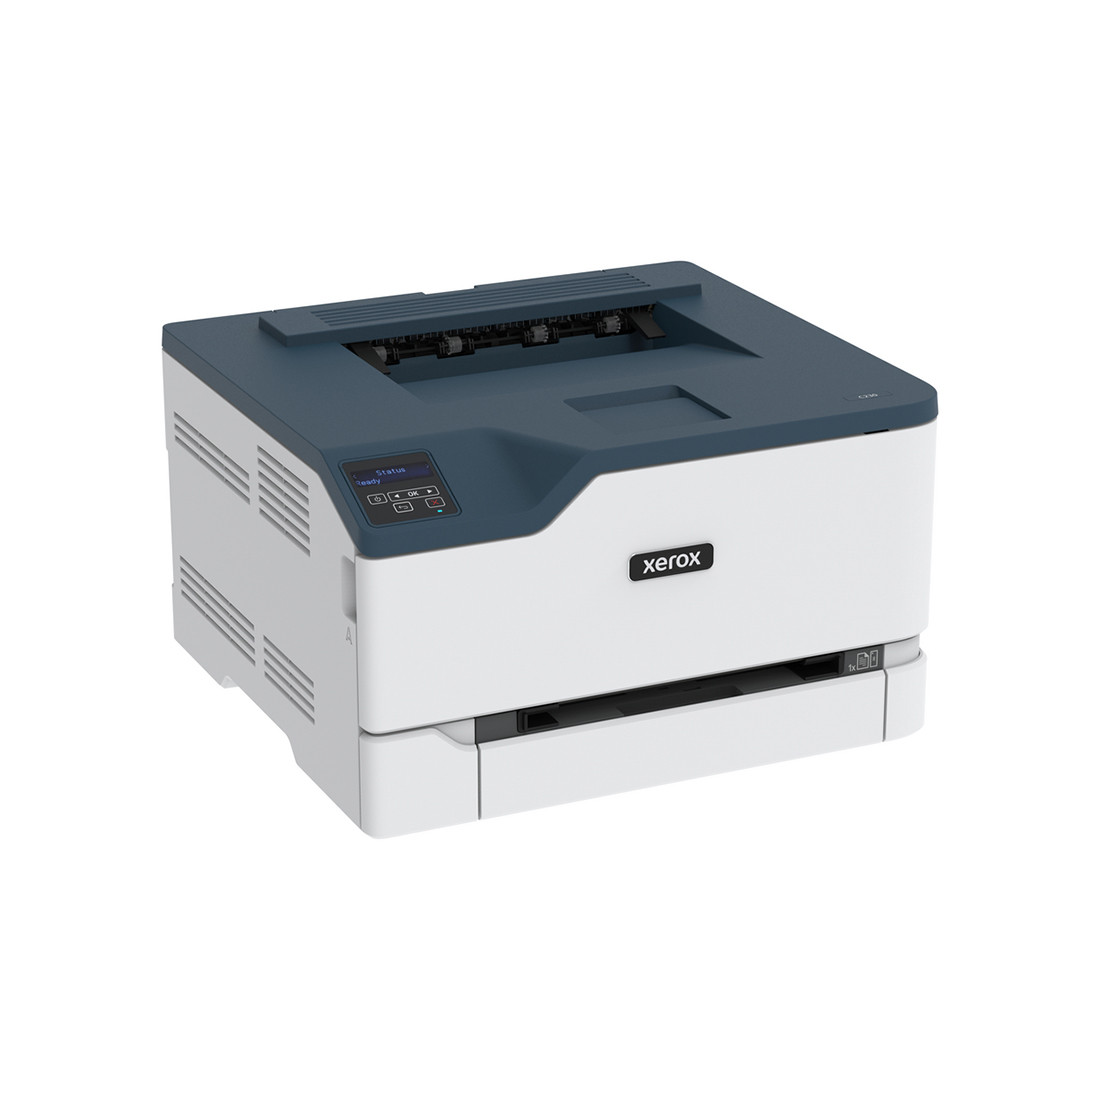 Цветной принтер Xerox C230DNI, фото 1